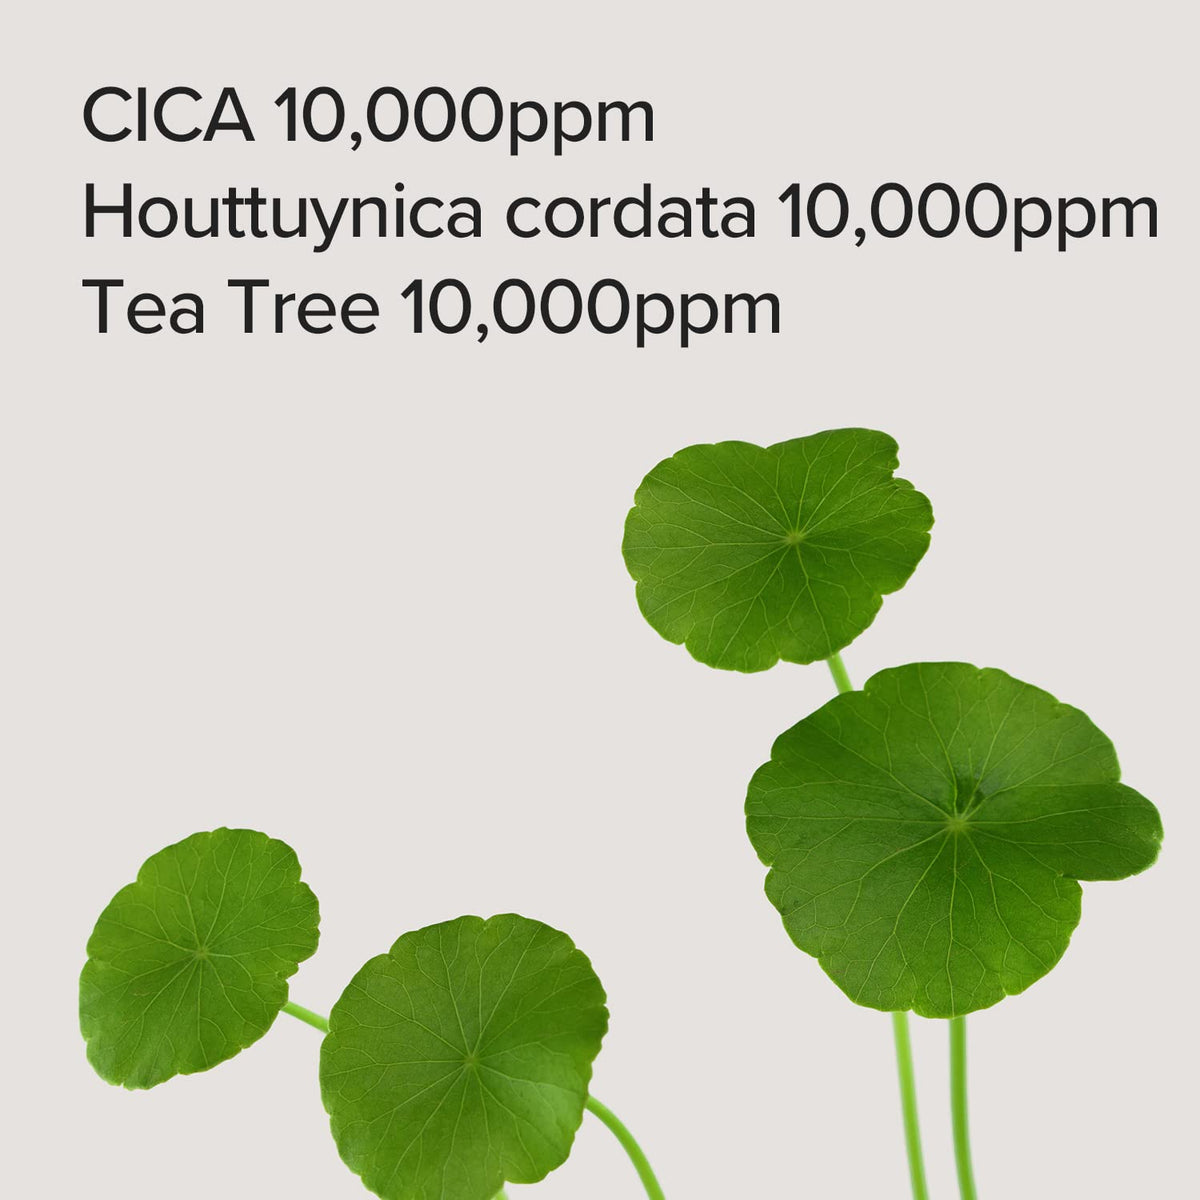 Mary & May - CICA Houttuynia Tea Tree Calming Mask 30ea